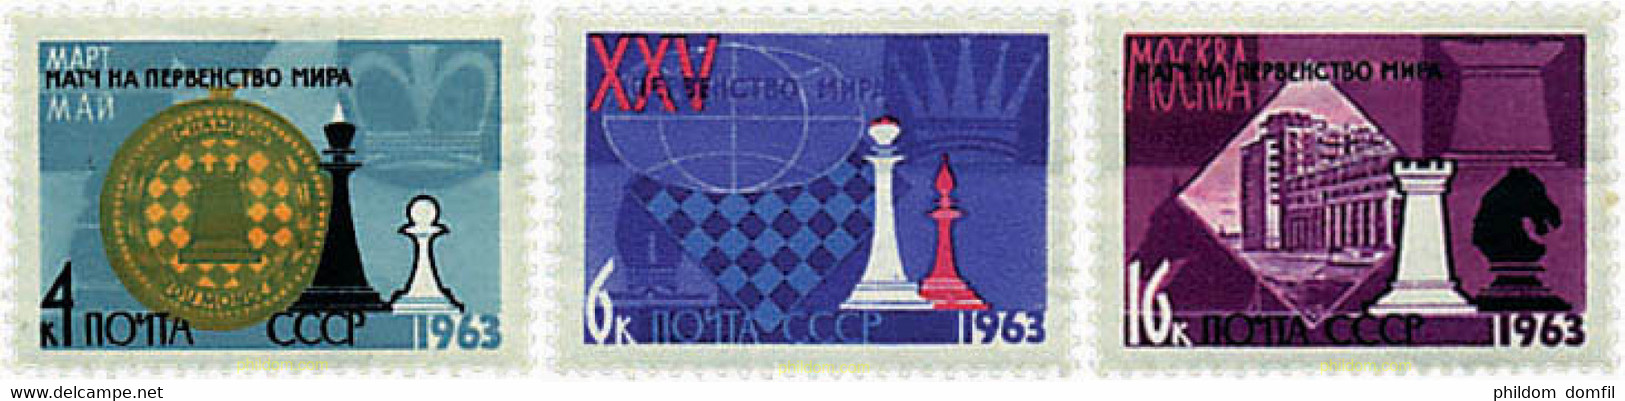 30753 MNH UNION SOVIETICA 1963 25 CAMPEONATO DE AJEDREZ EN MOSCU - Collezioni